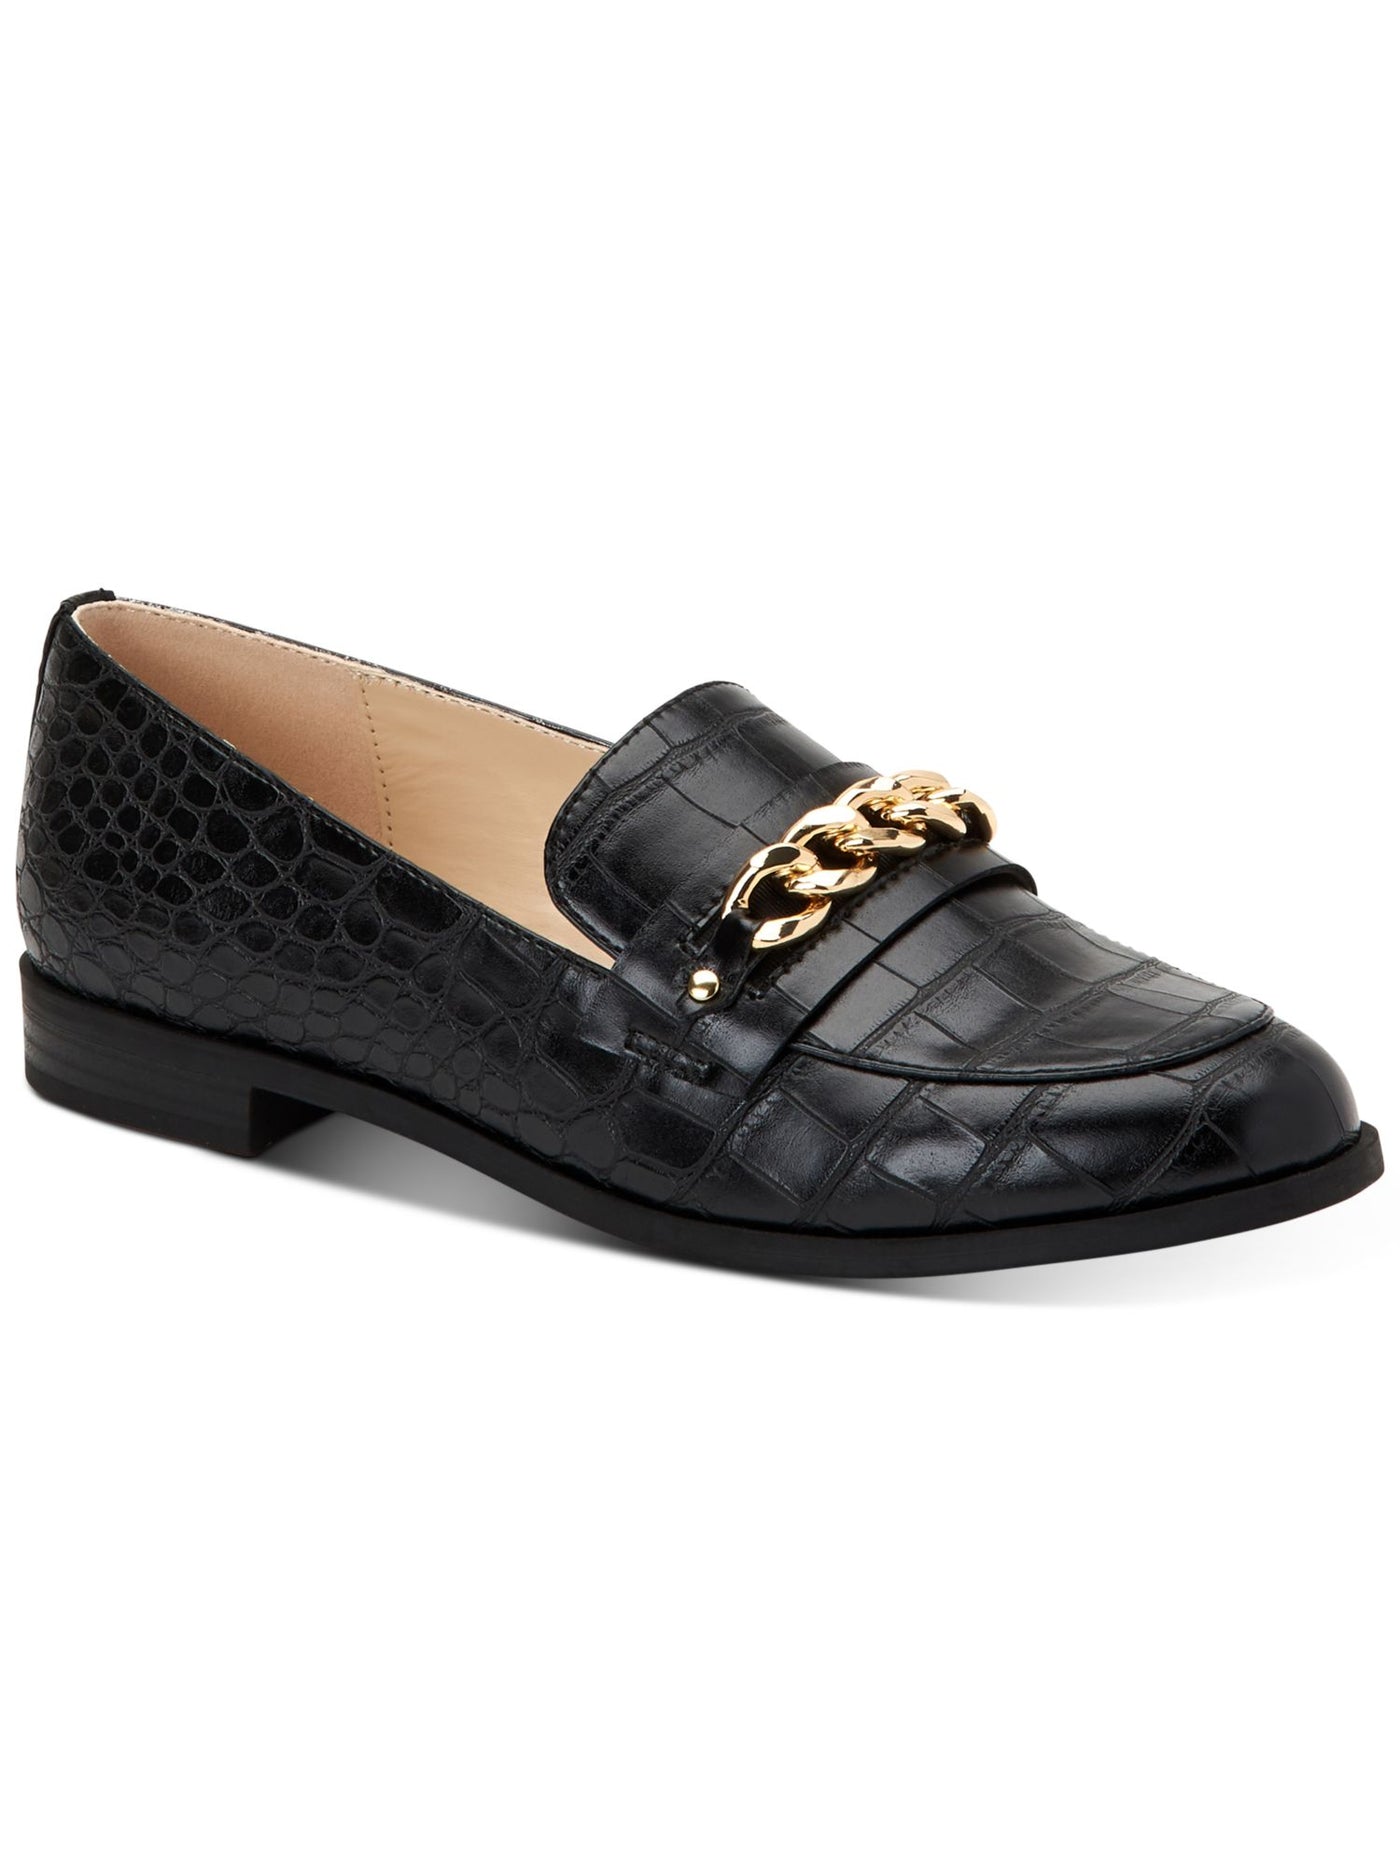 CHARTER CLUB Womens Black Crocodile Chain Comfort Kattelle Round Toe Block Heel Slip On Loafers Shoes 6 M